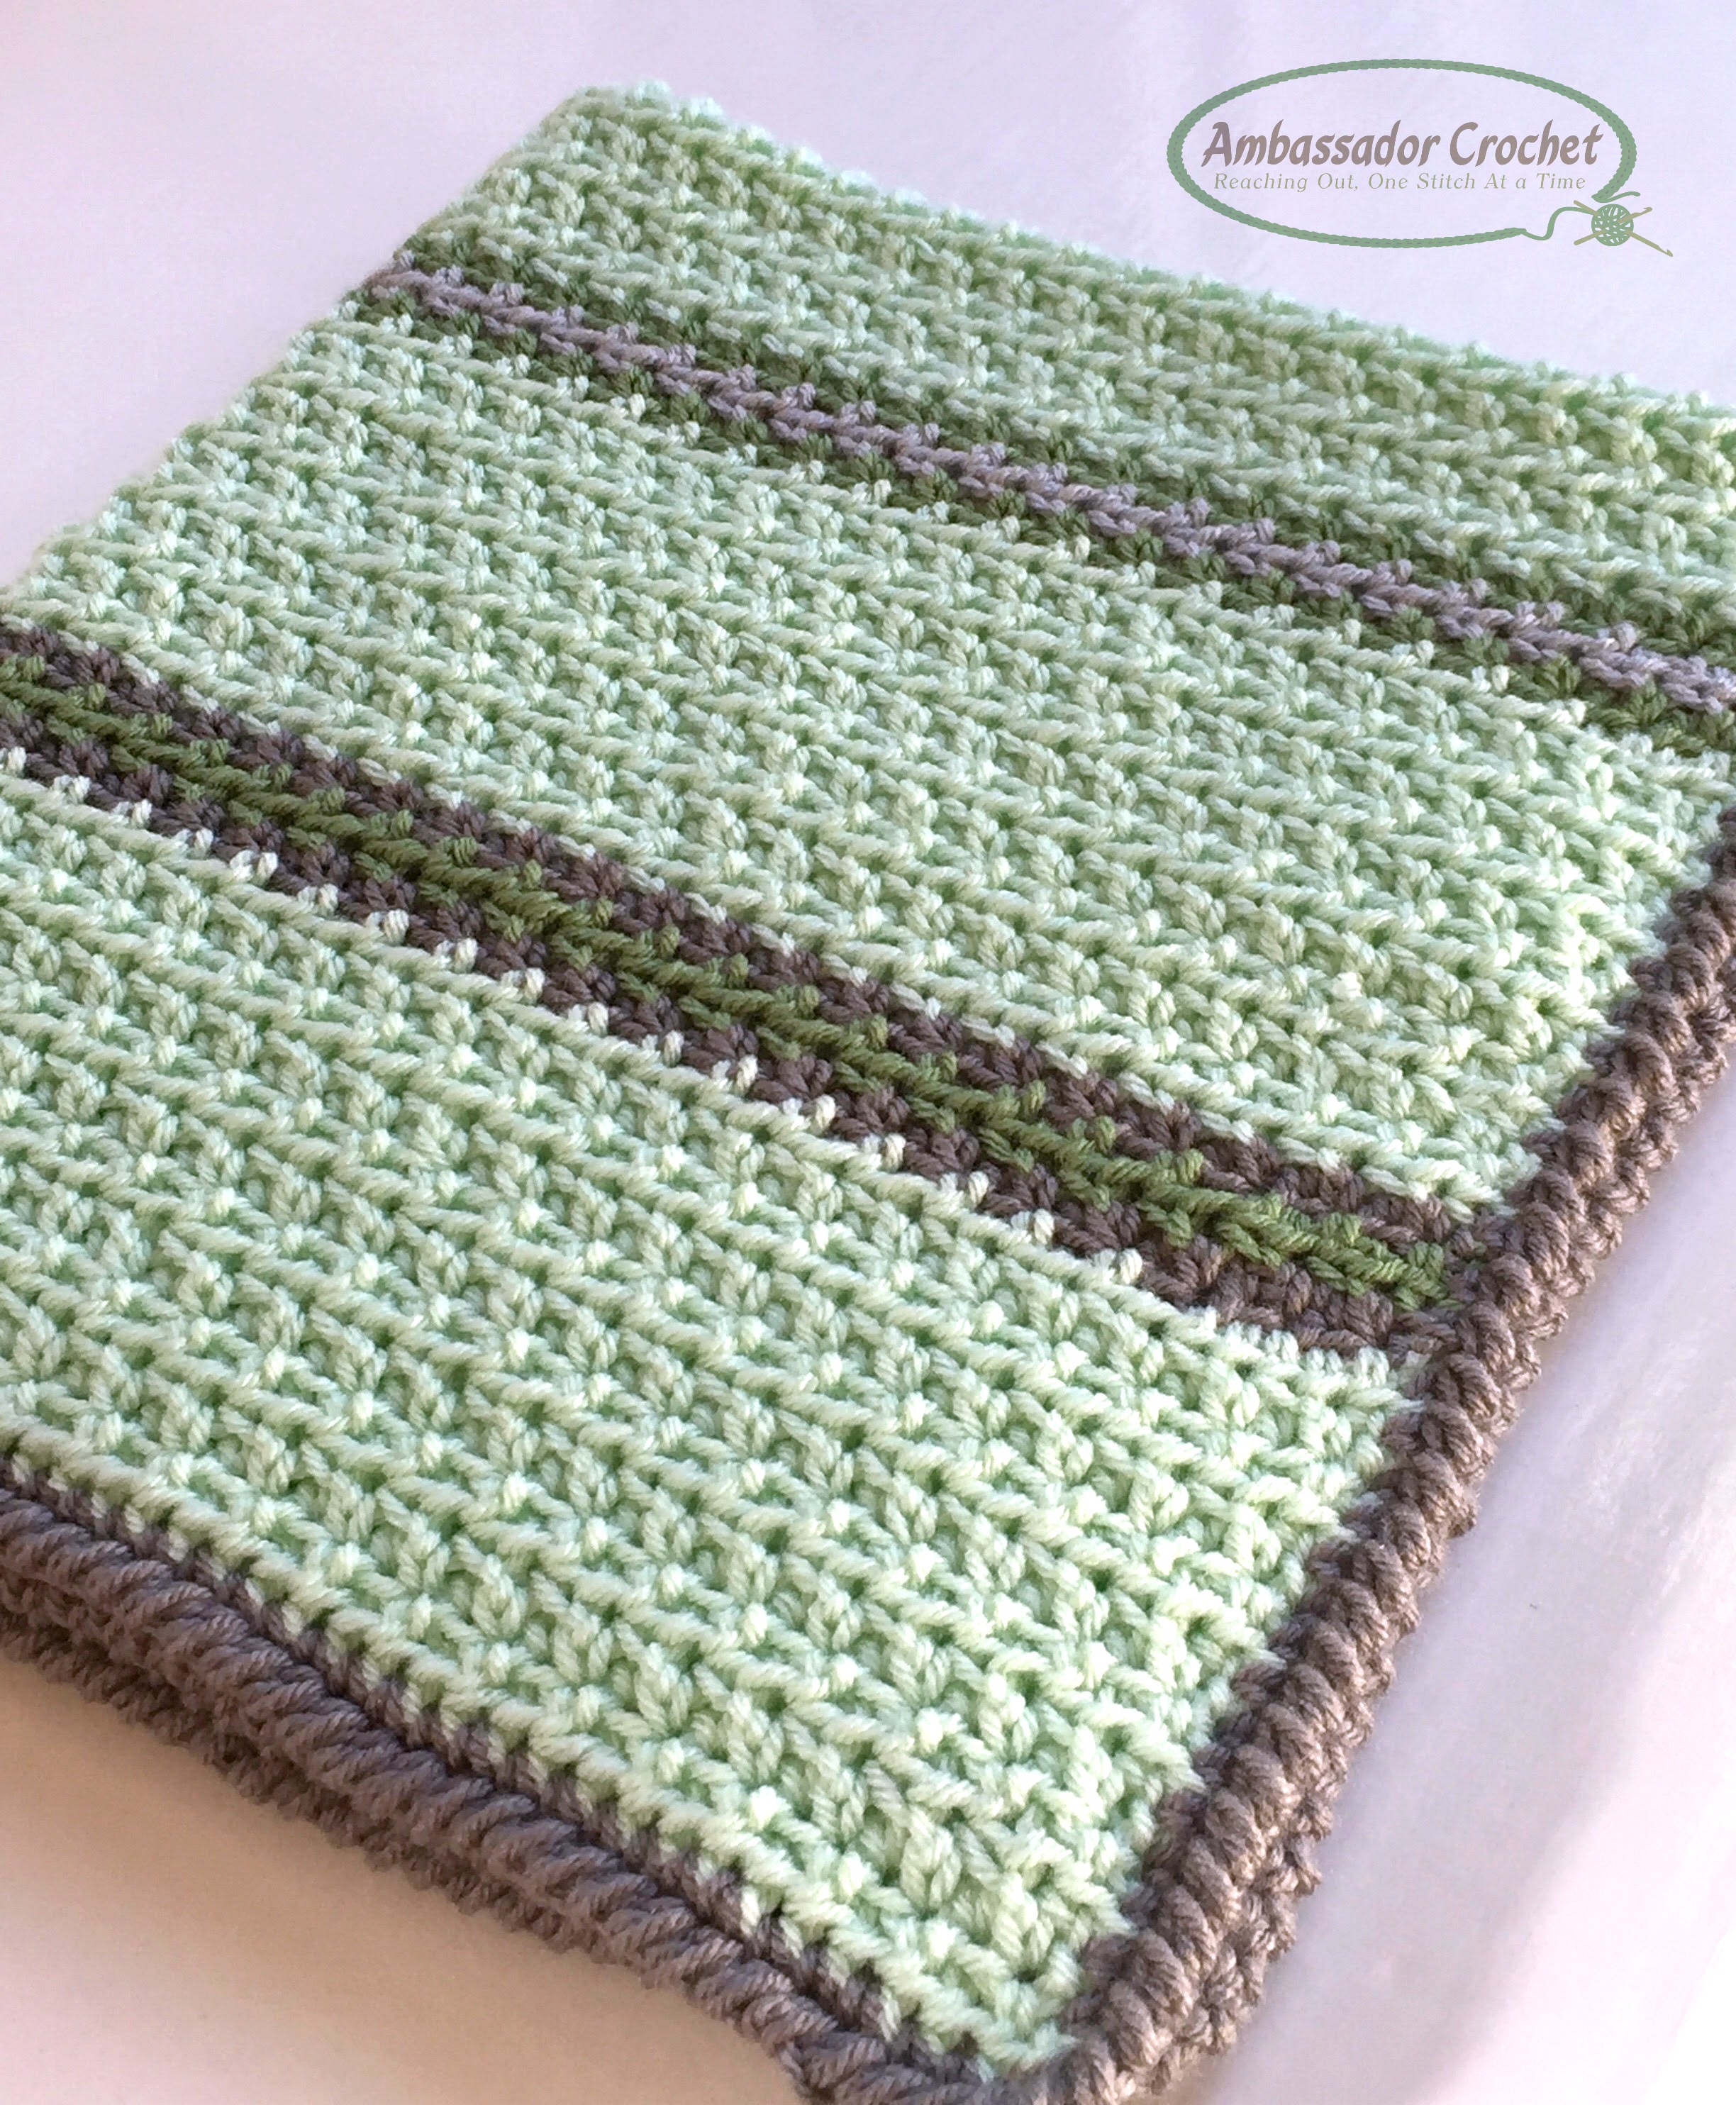 Soft & Squishy Baby Blanket - Free Crochet pattern by Ambassador Crochet